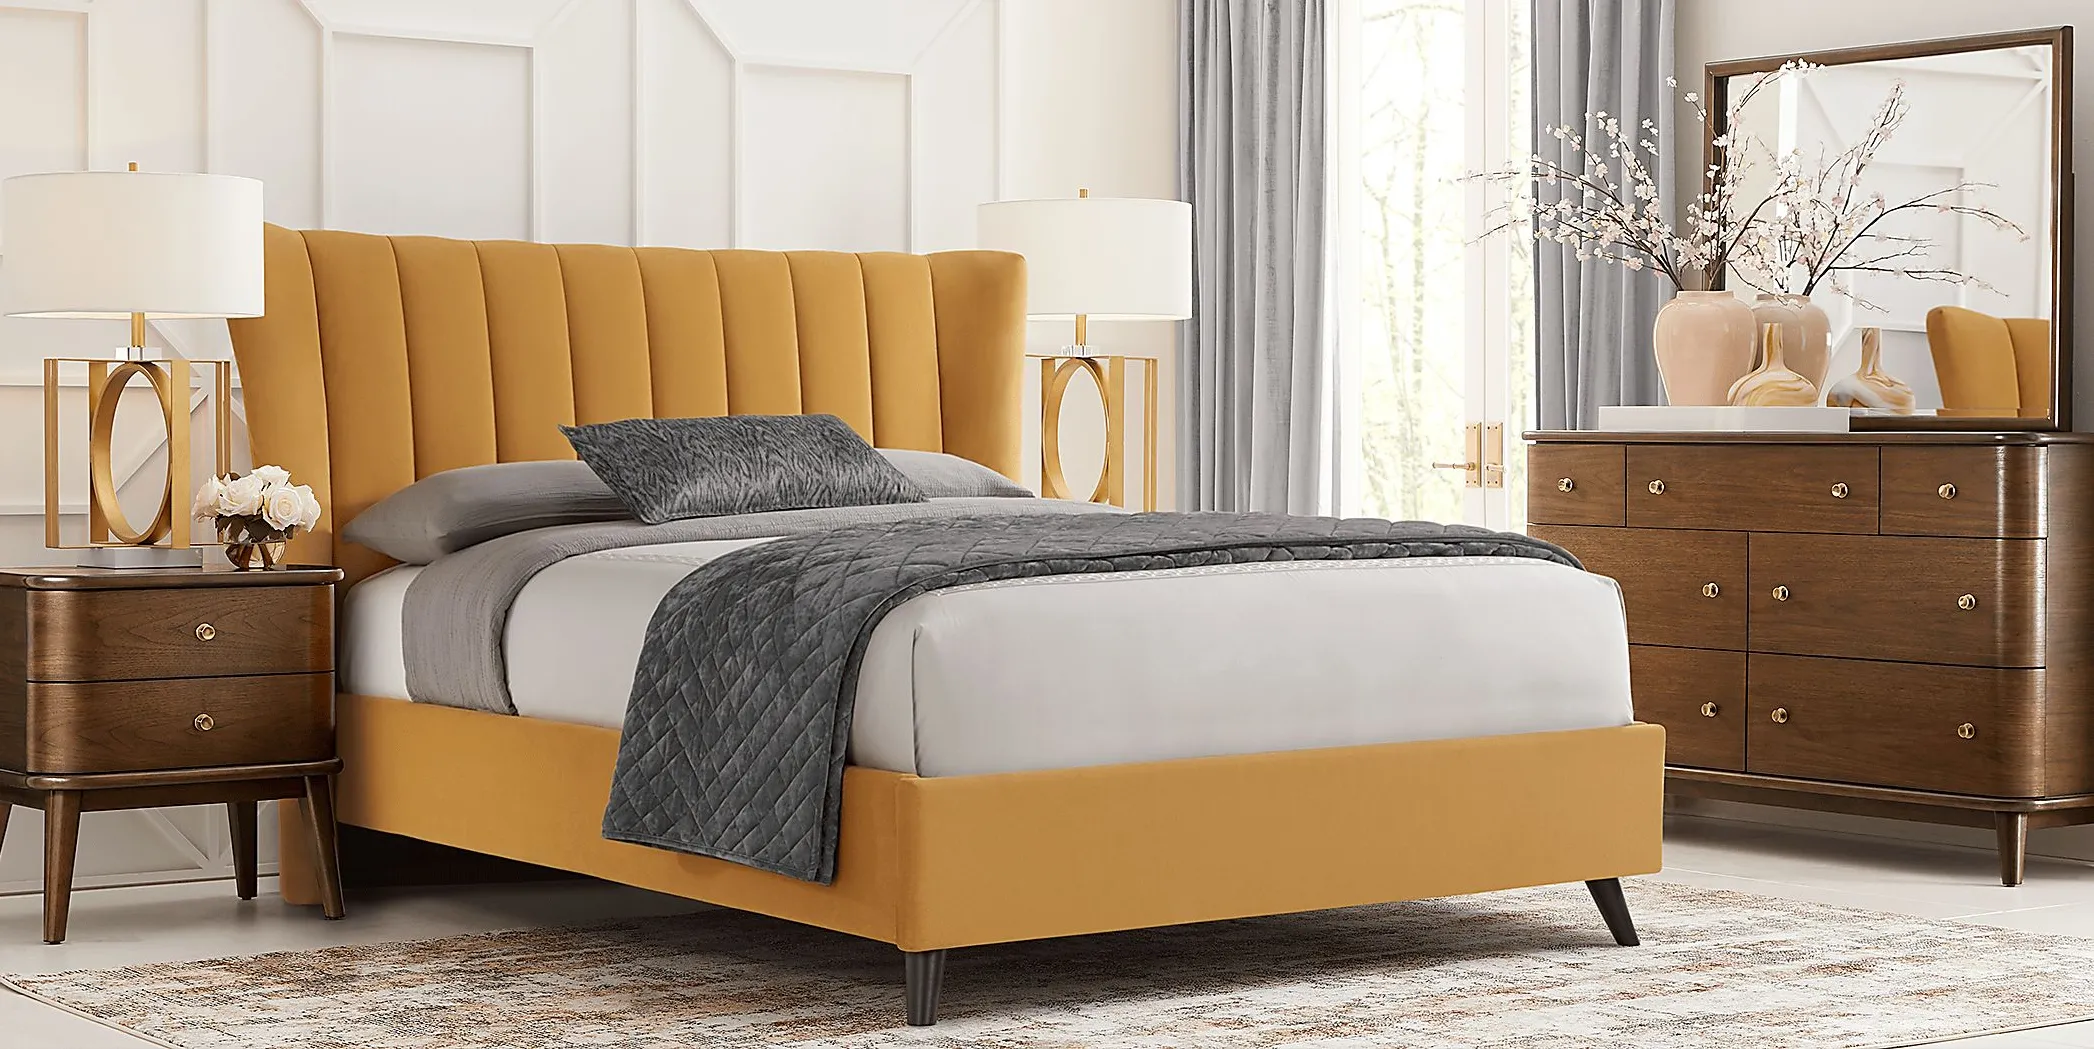 Devon Loft Walnut 5 Pc Bedroom with Nanton Park Yellow King Upholstered Bed